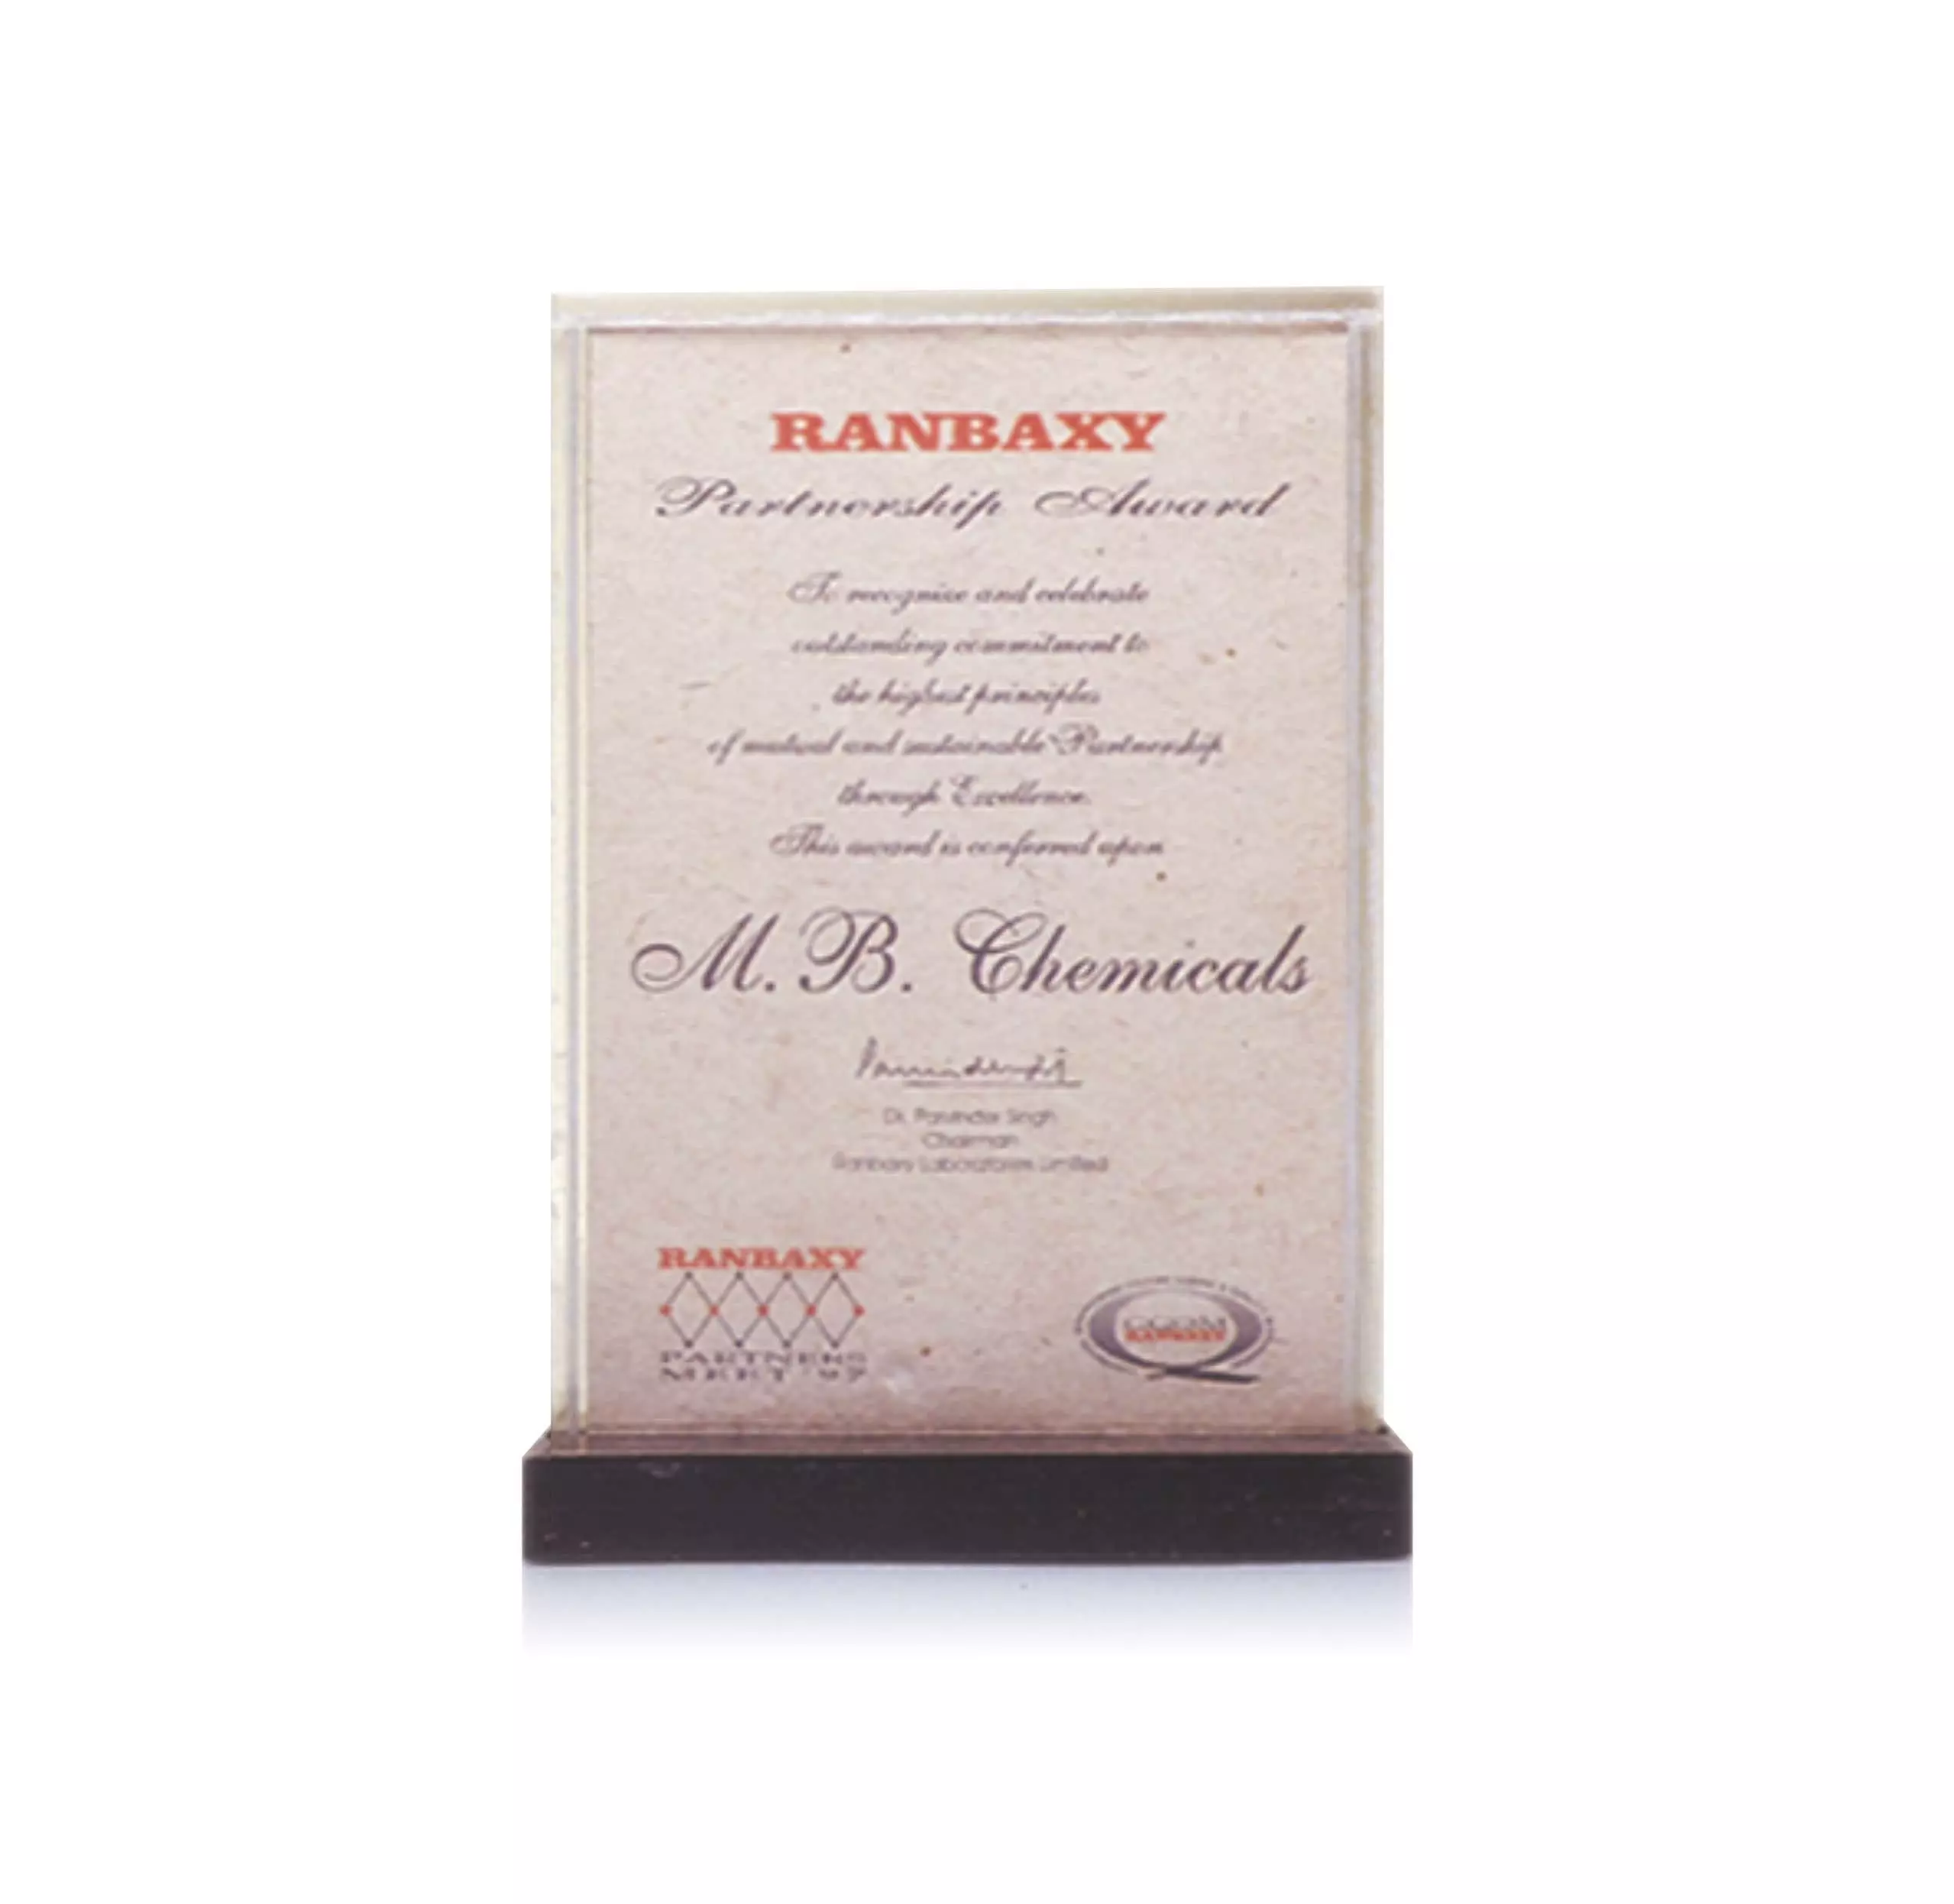 Ranbaxy Partnership Award